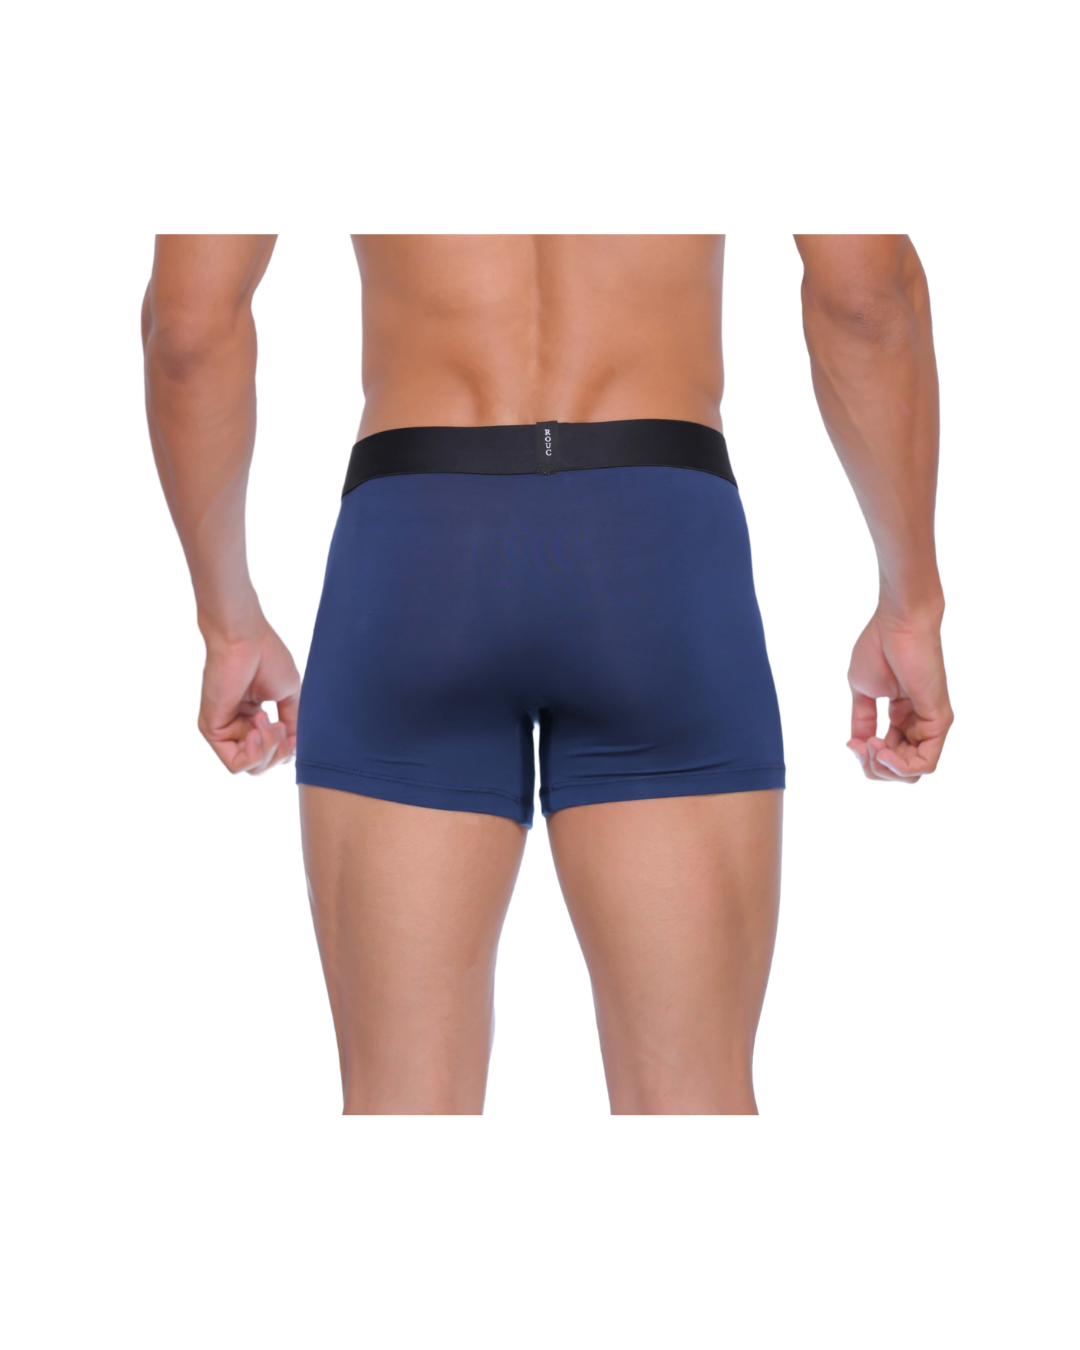 Men Underwear - TRUNKS - 2 Pack (Black & Blue)